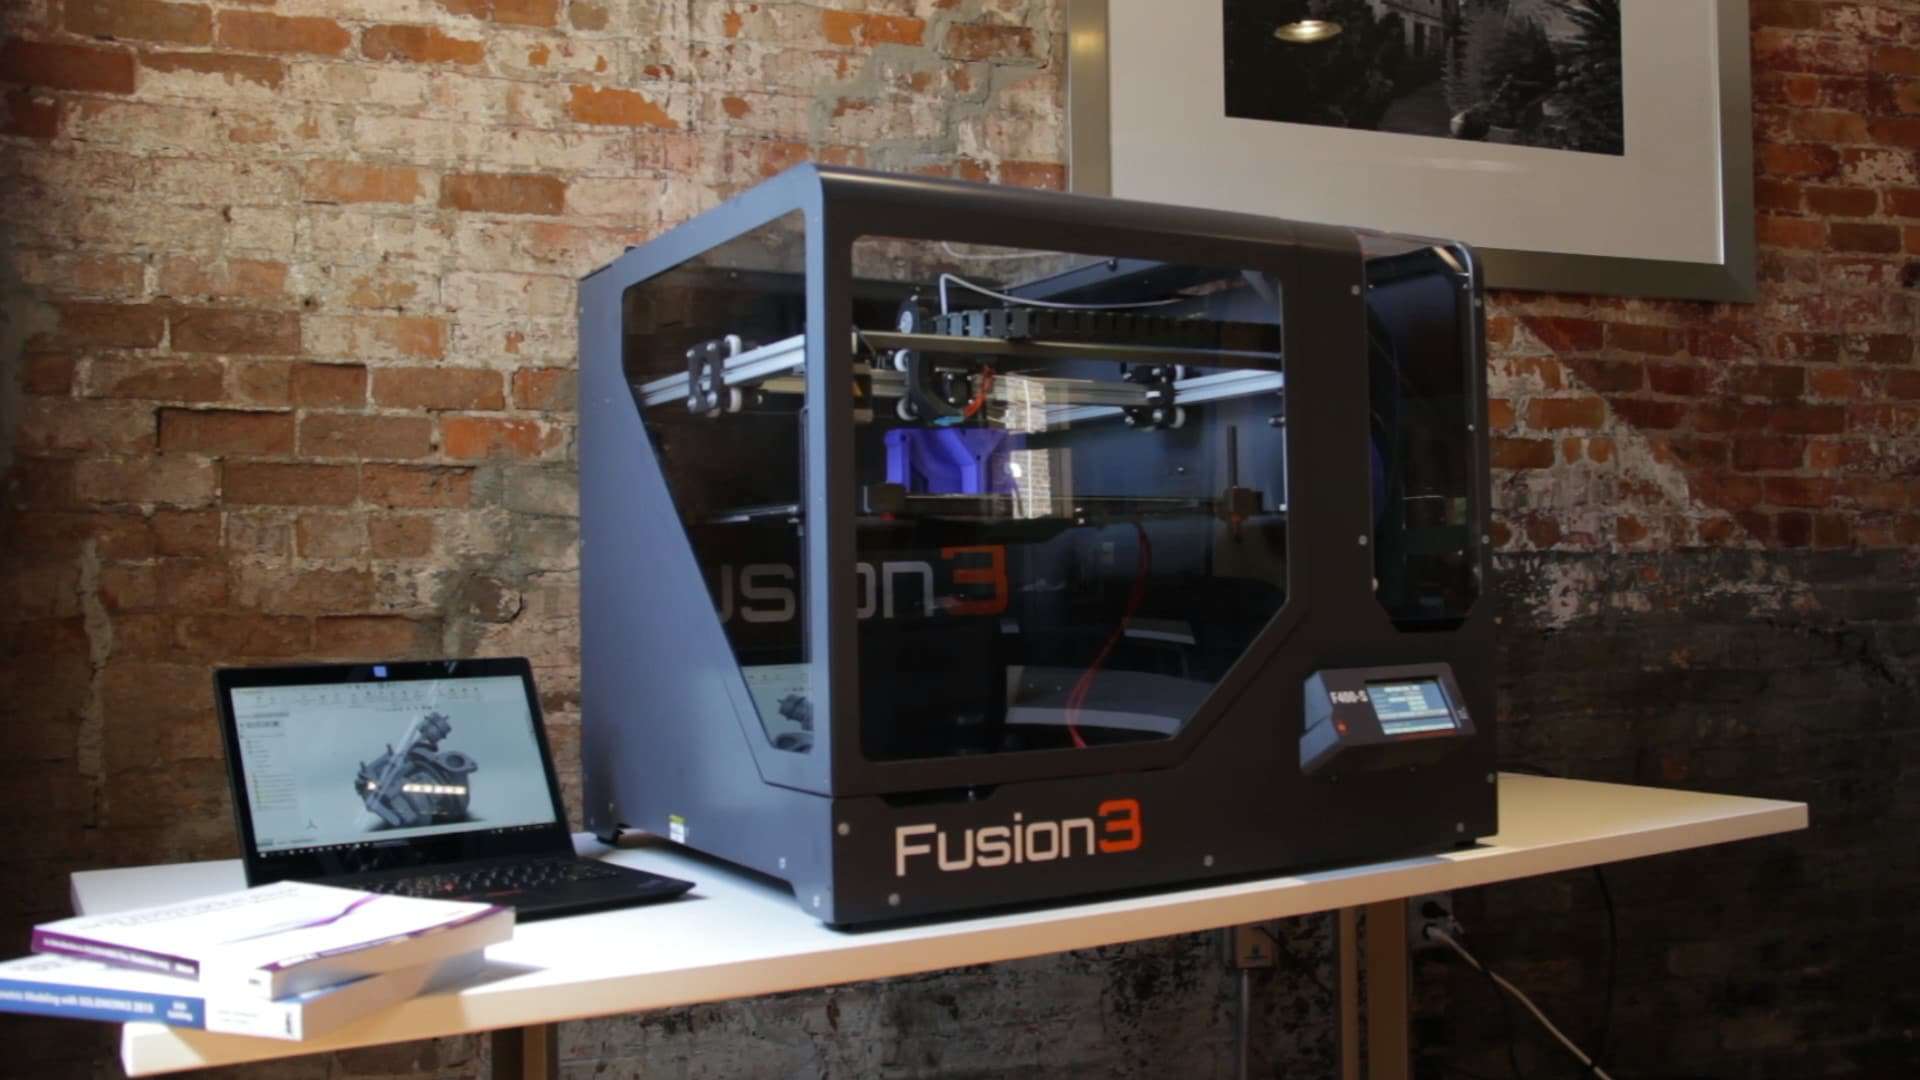 Alternative To Industrial 3D Fusion3 F400 - Fusion 3 Design